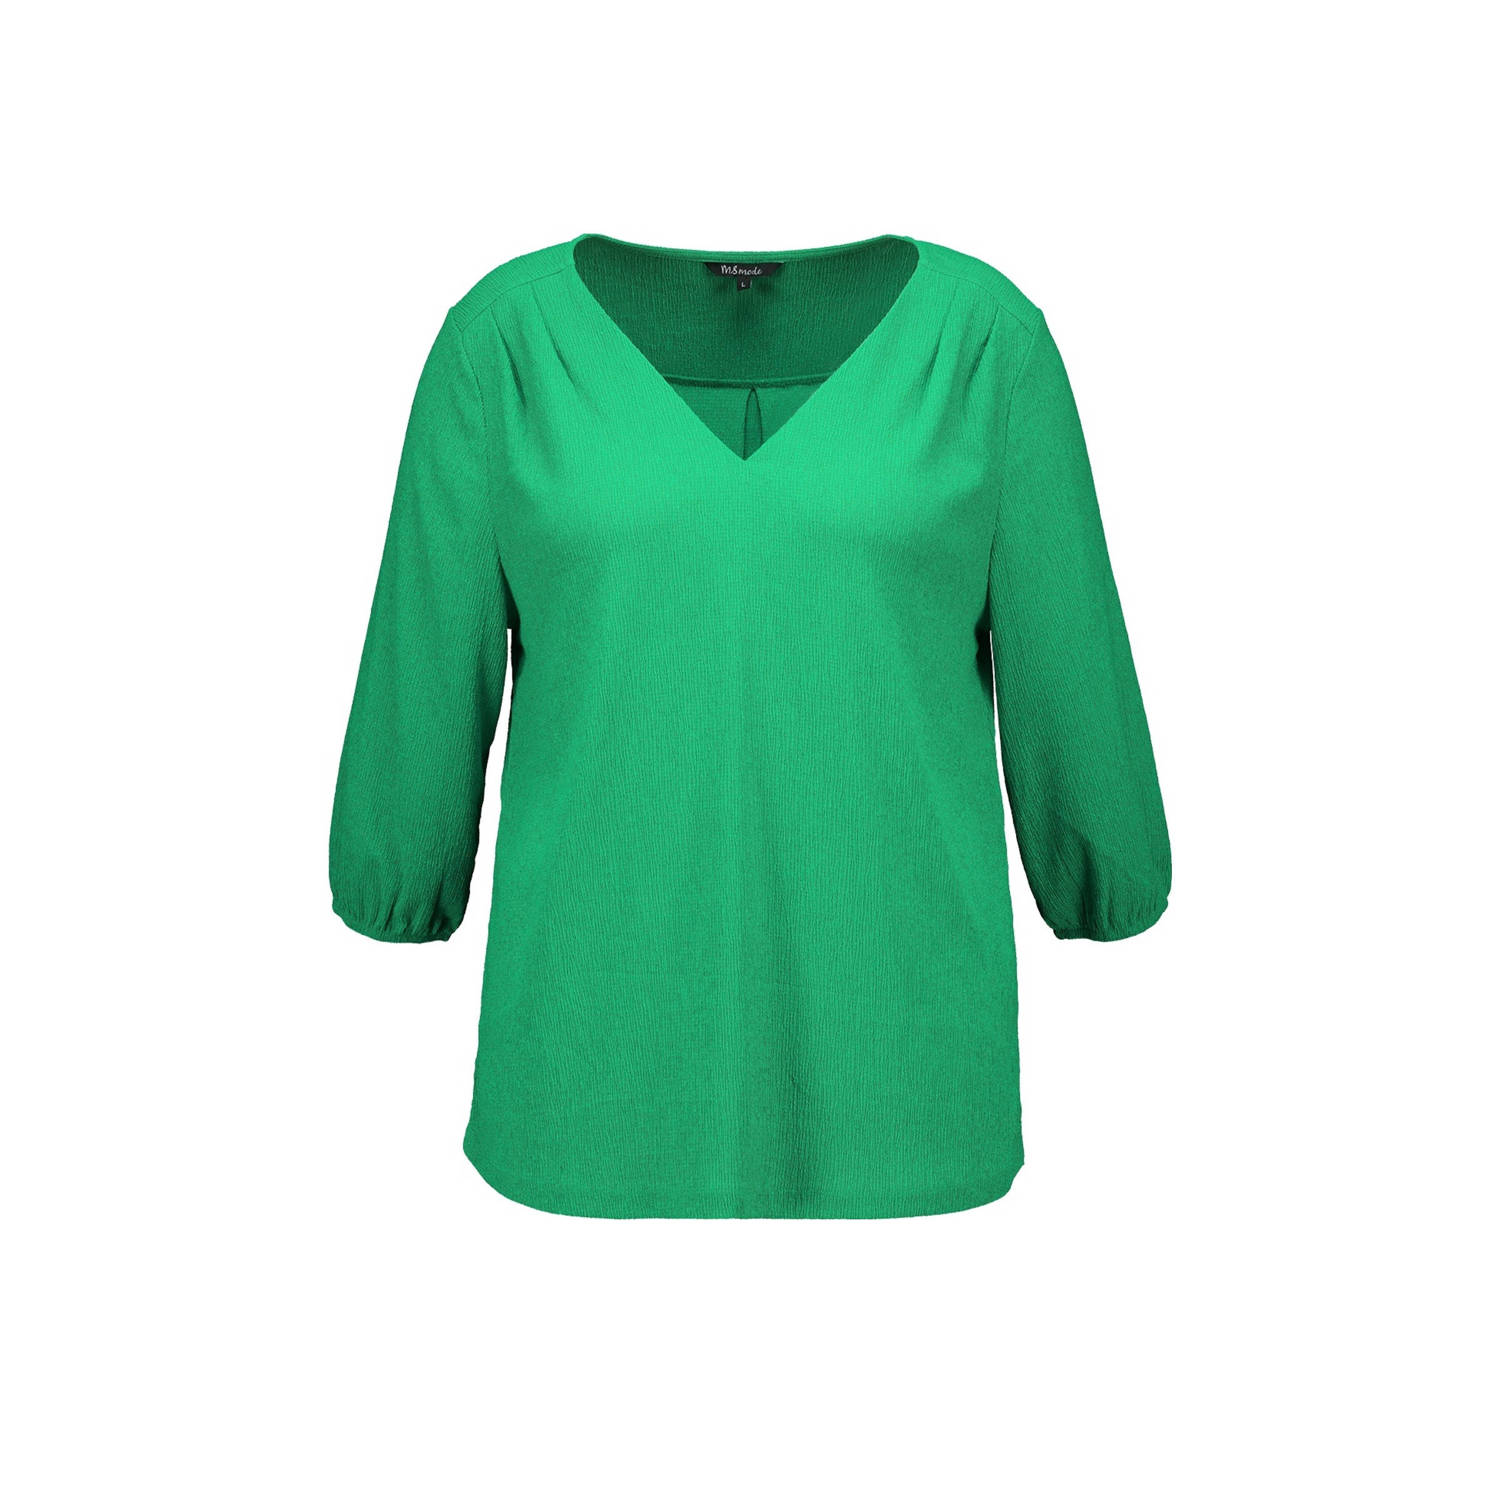 MS Mode blousetop groen